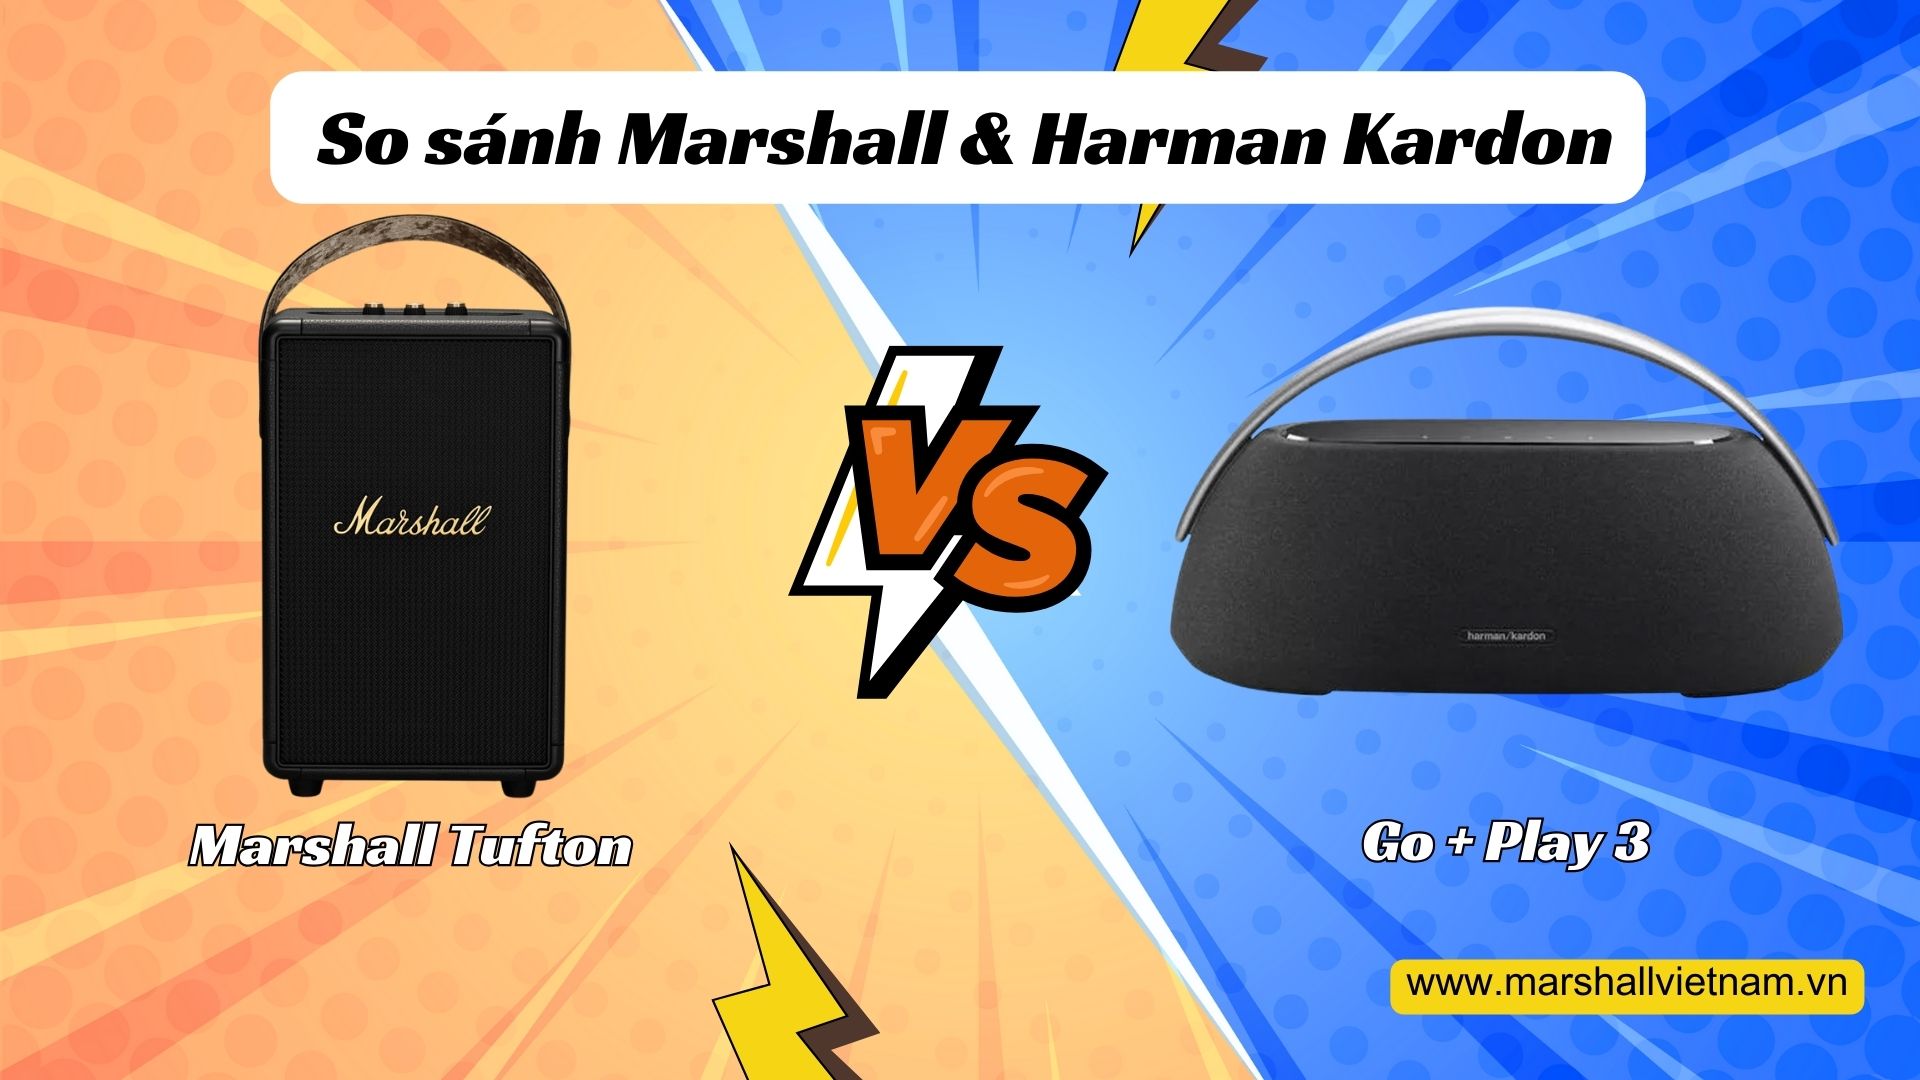 So sánh nhanh loa Marshall Tufton & Harman Kardon Go+Play 3